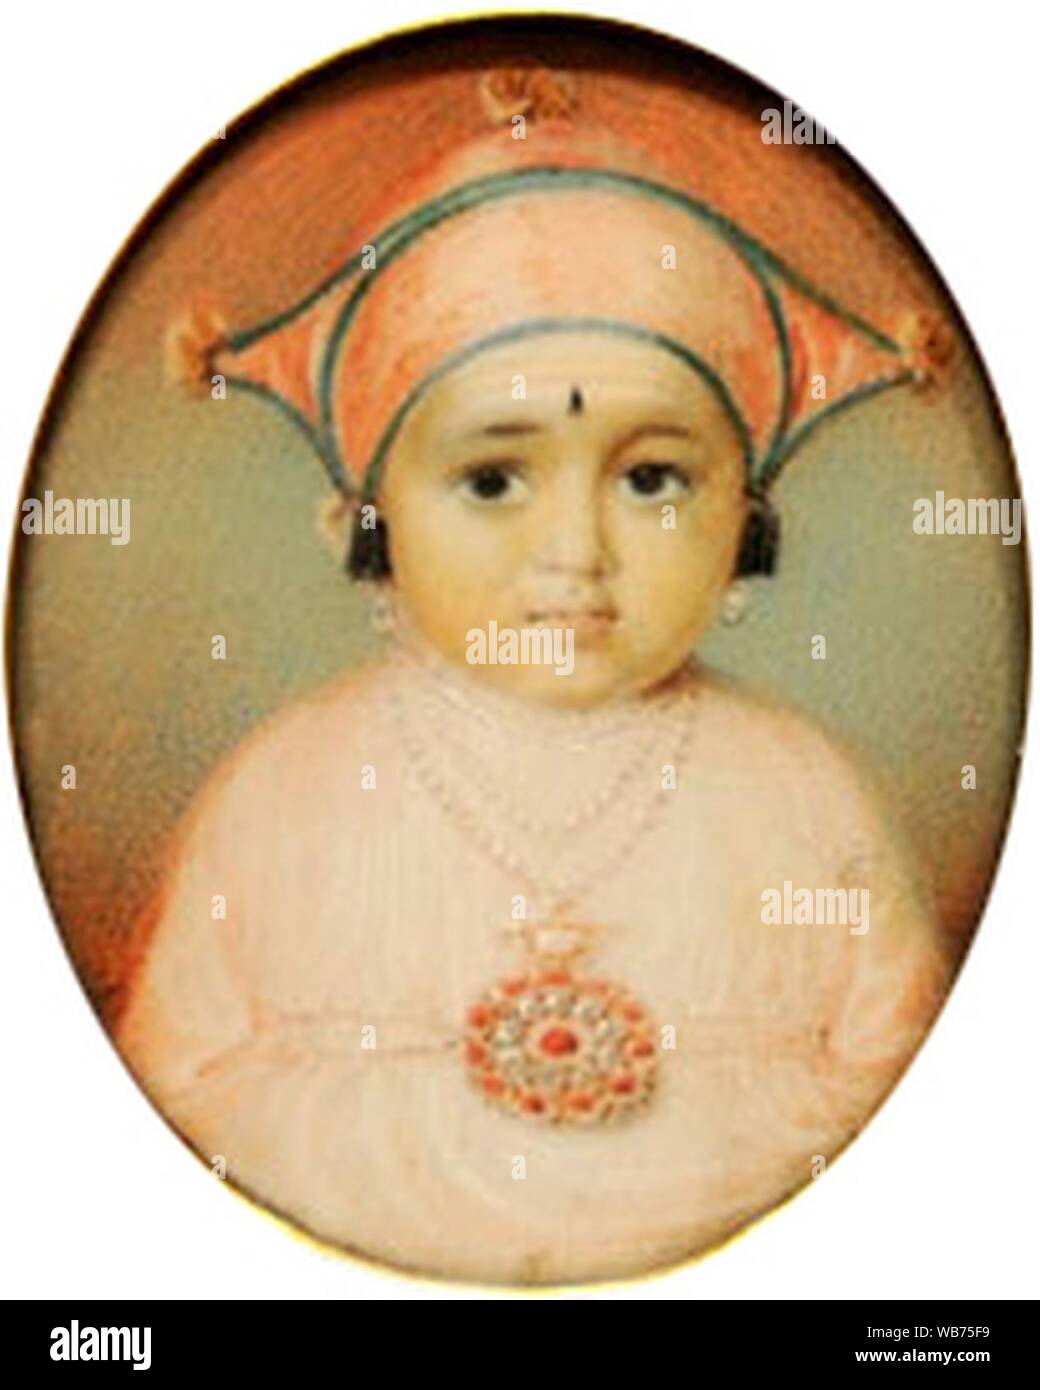 Edward Nash - portrait of Baby Rajah. Stock Photo